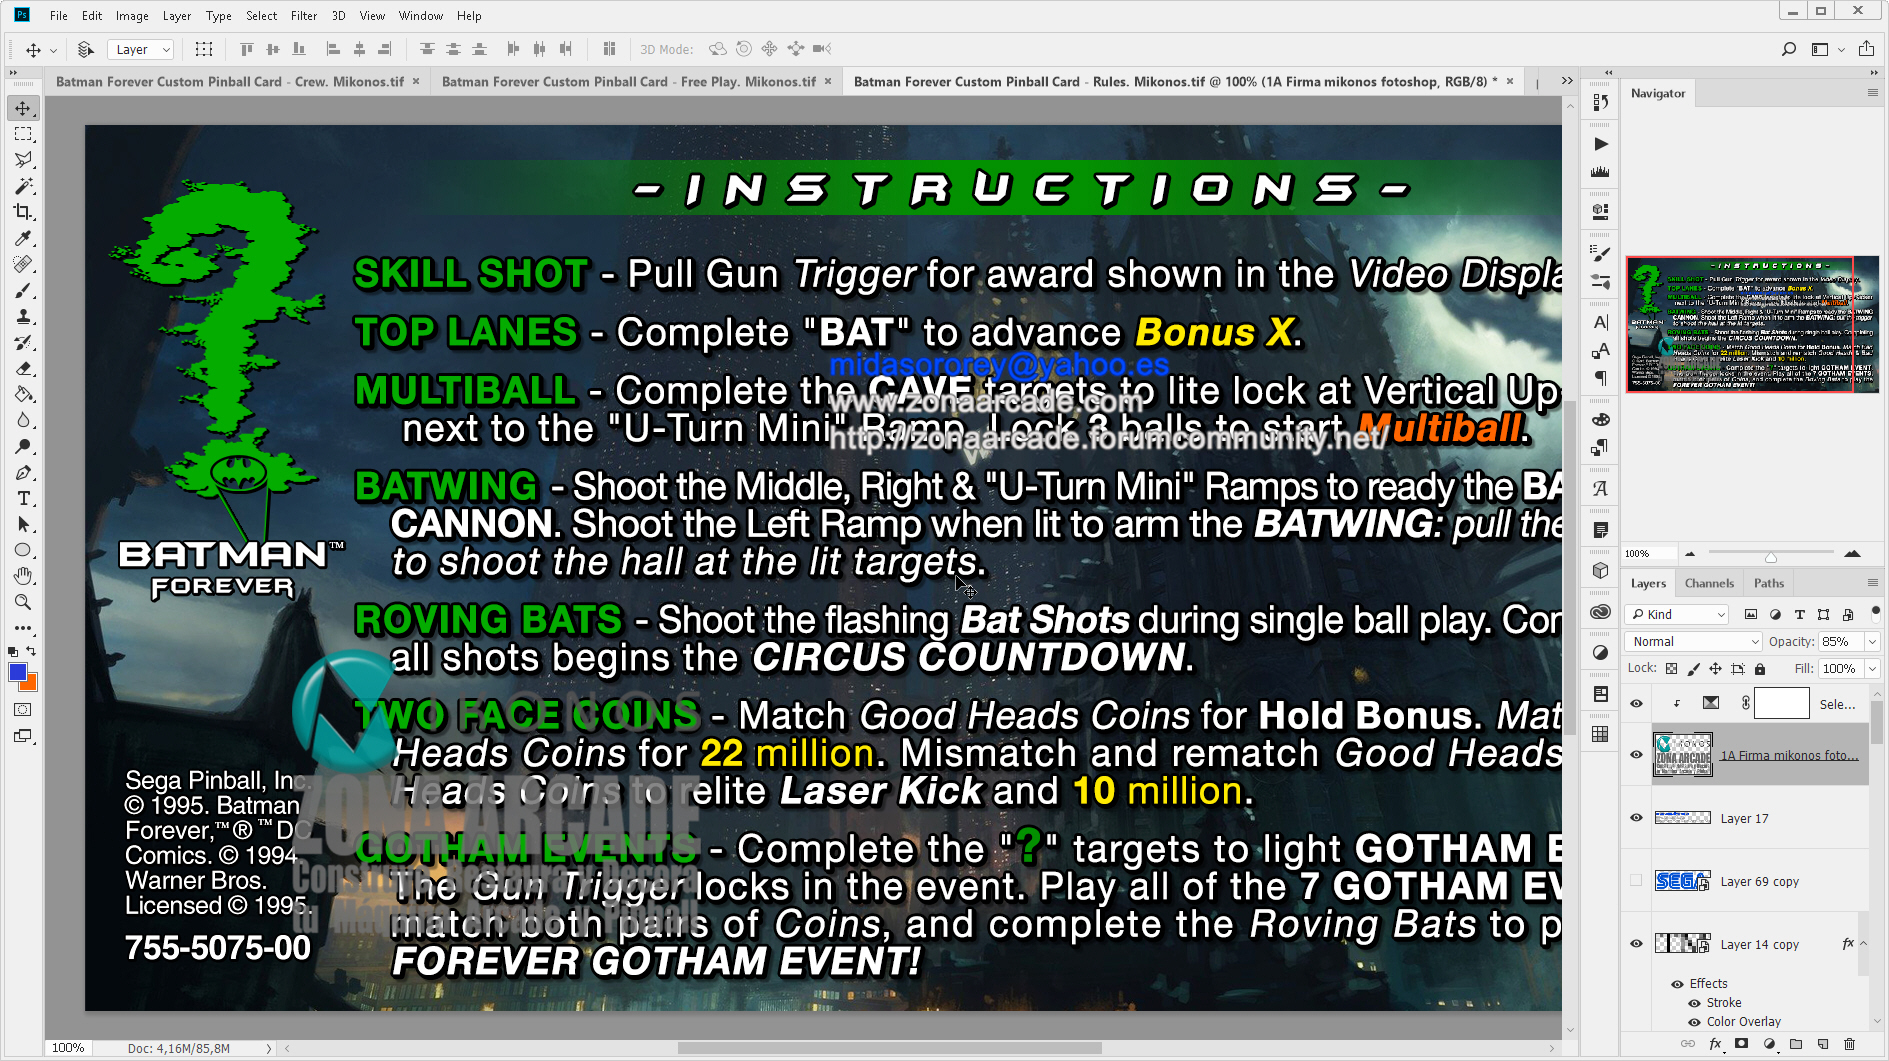 Batman-Forever-Custom-Pinball-Card-Rules2-Mikonos2